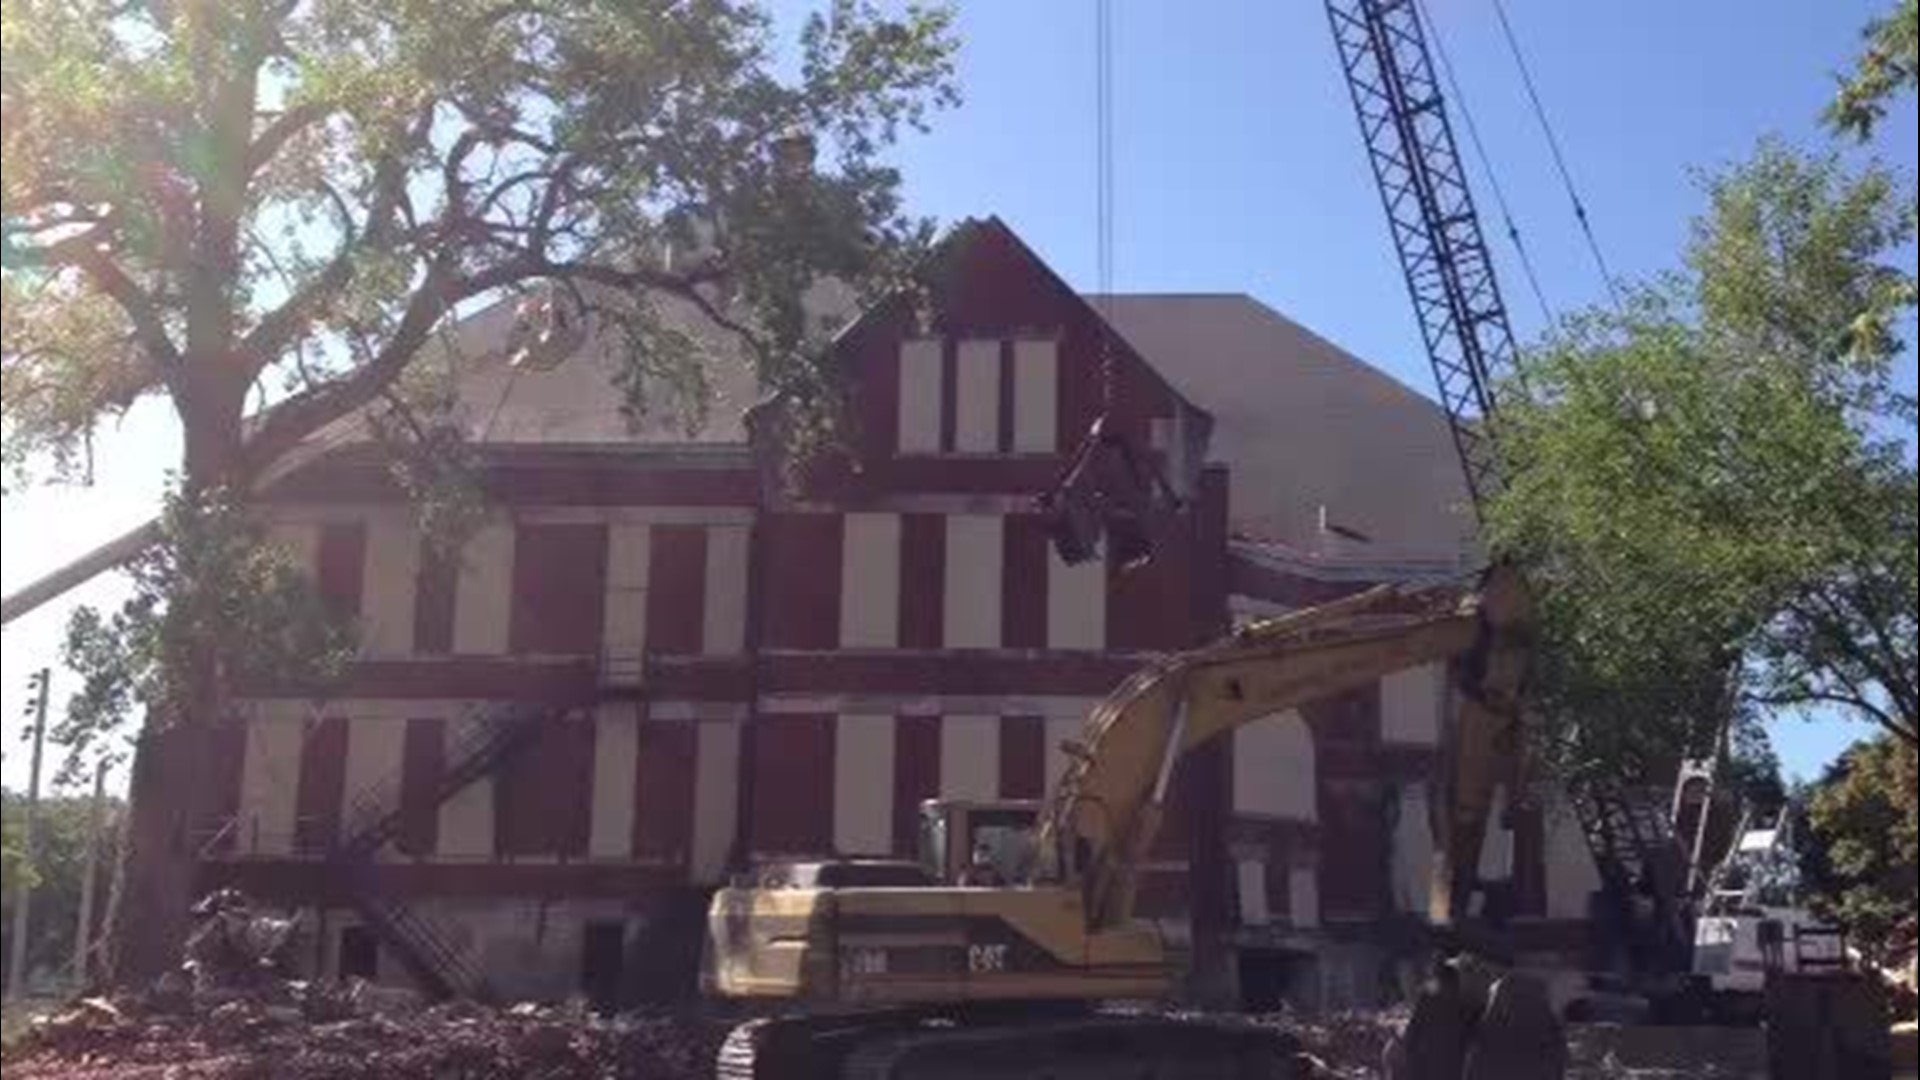 Lincoln School demoliton 1 of 2 WQAD Video 8-20-12.mov